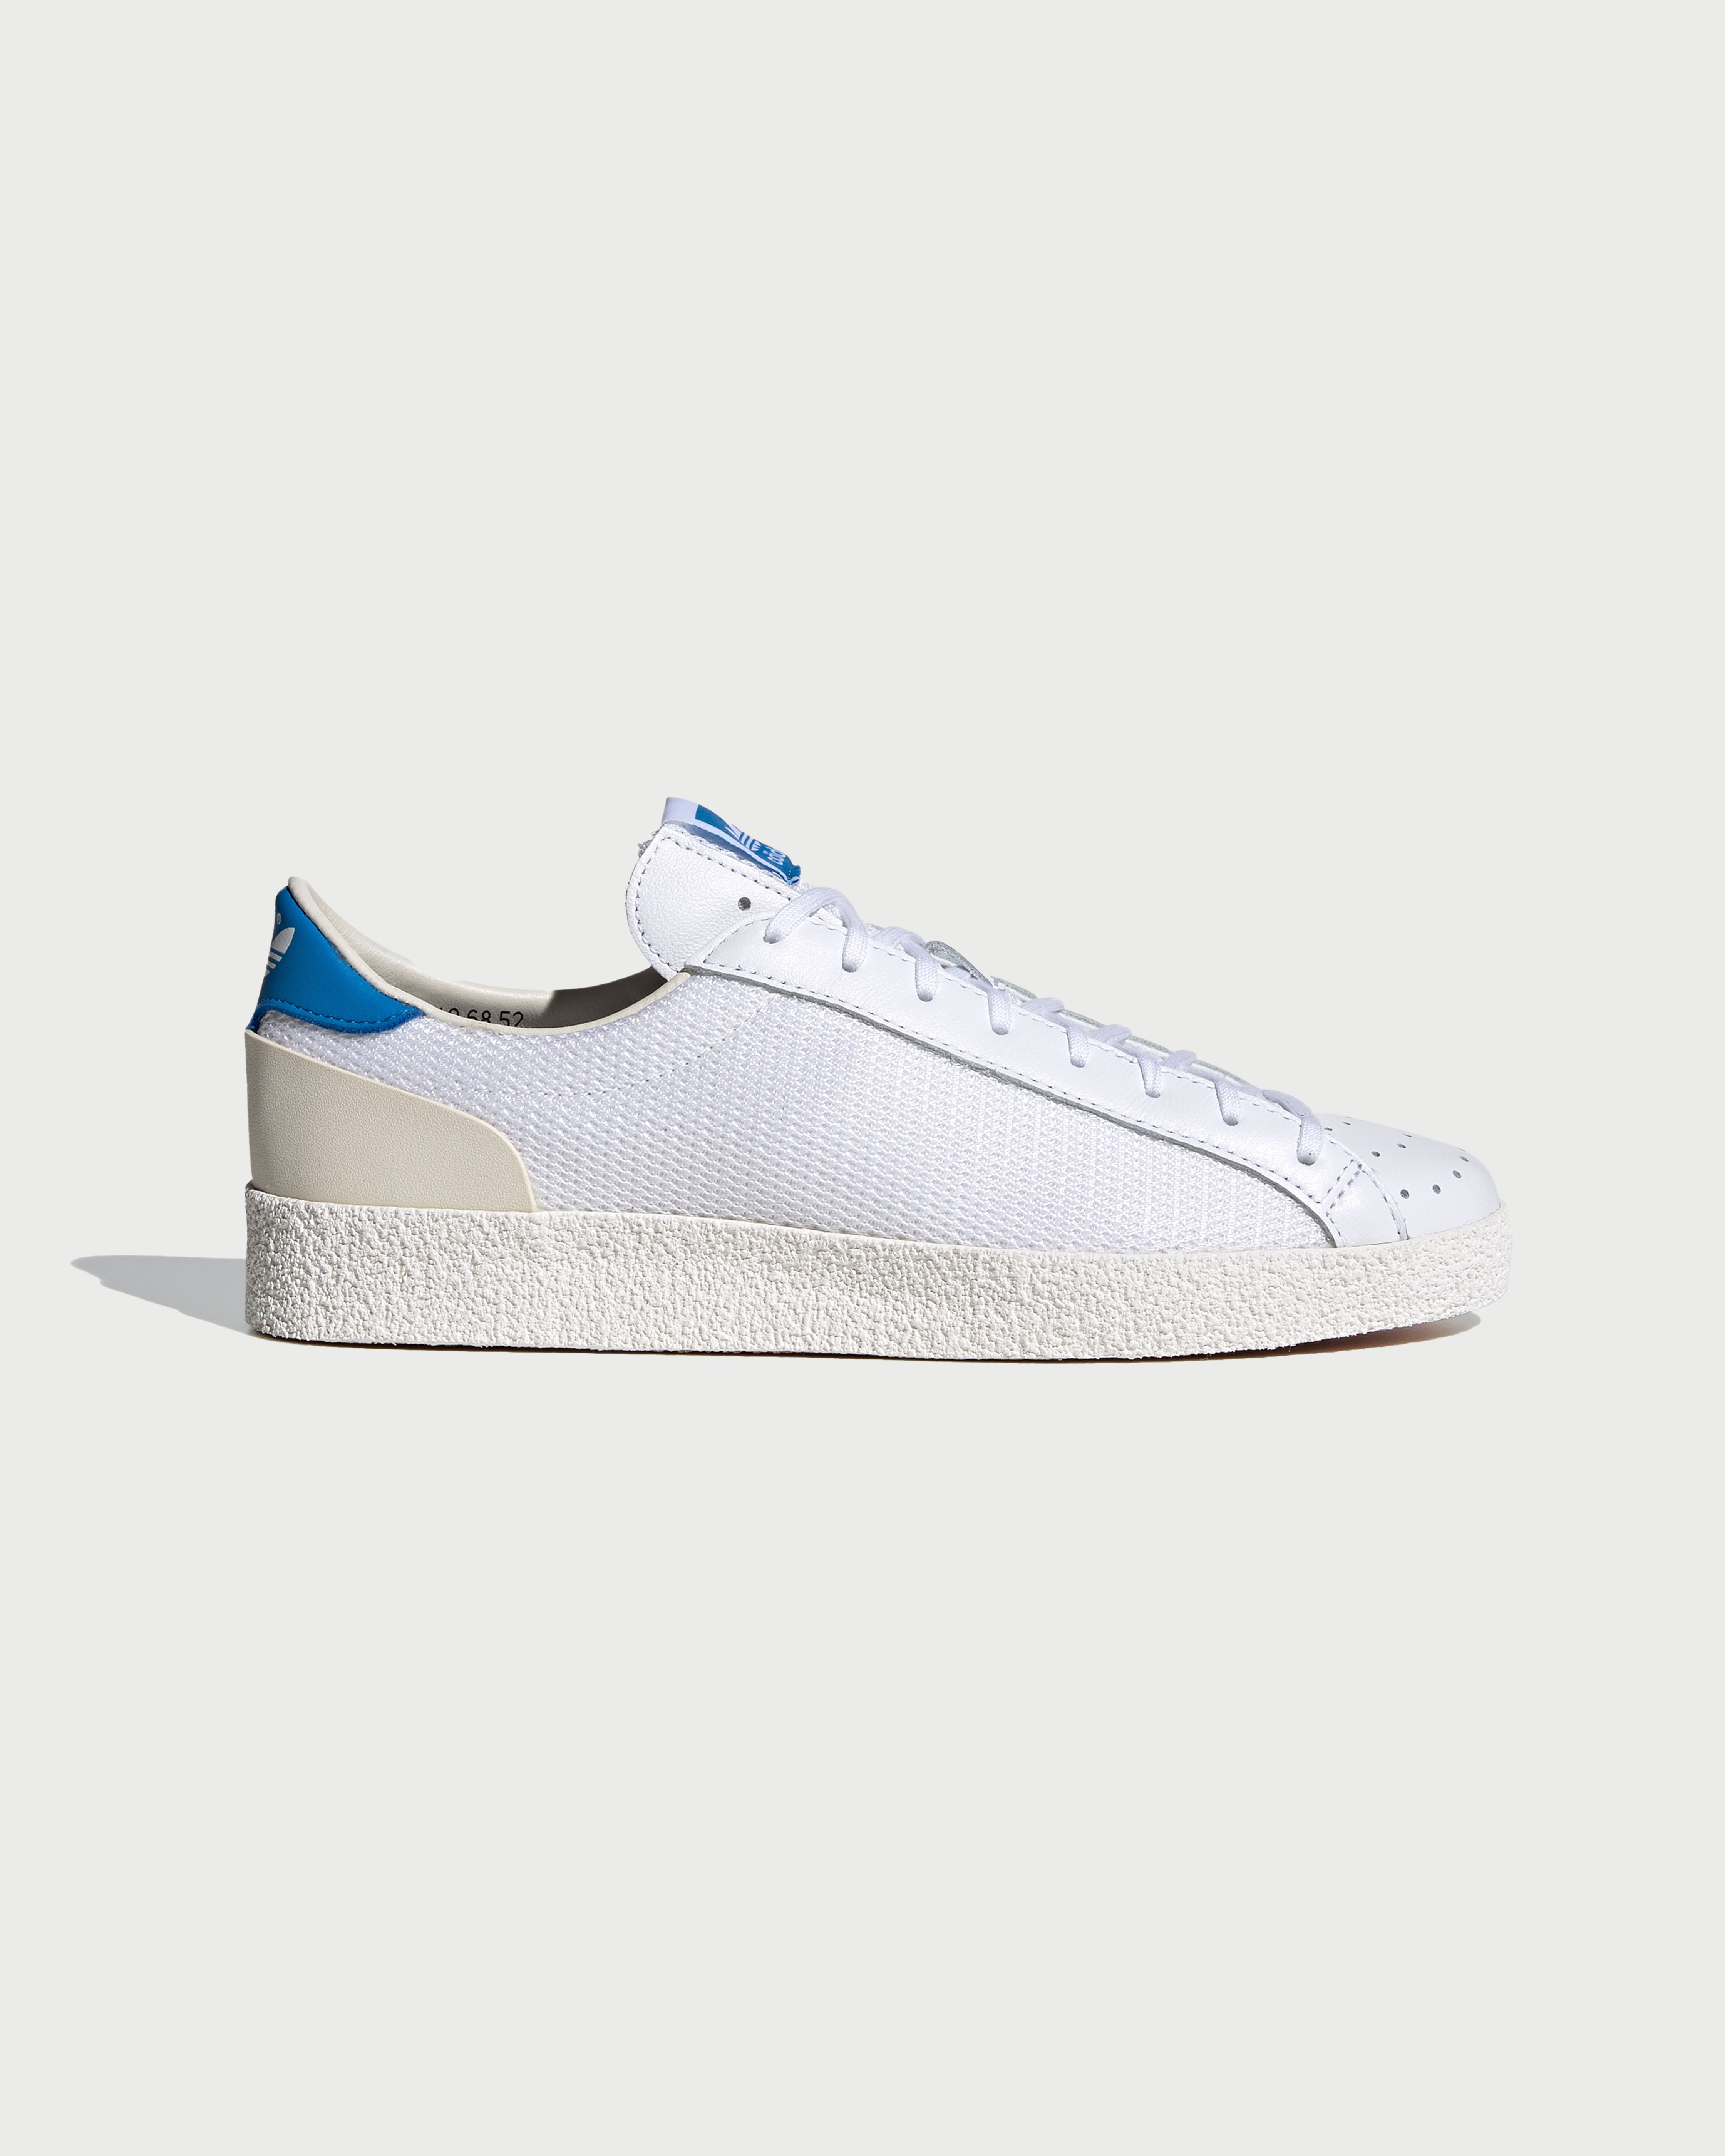 Adidas - Aderley Spezial Off White - Footwear - White - Image 1